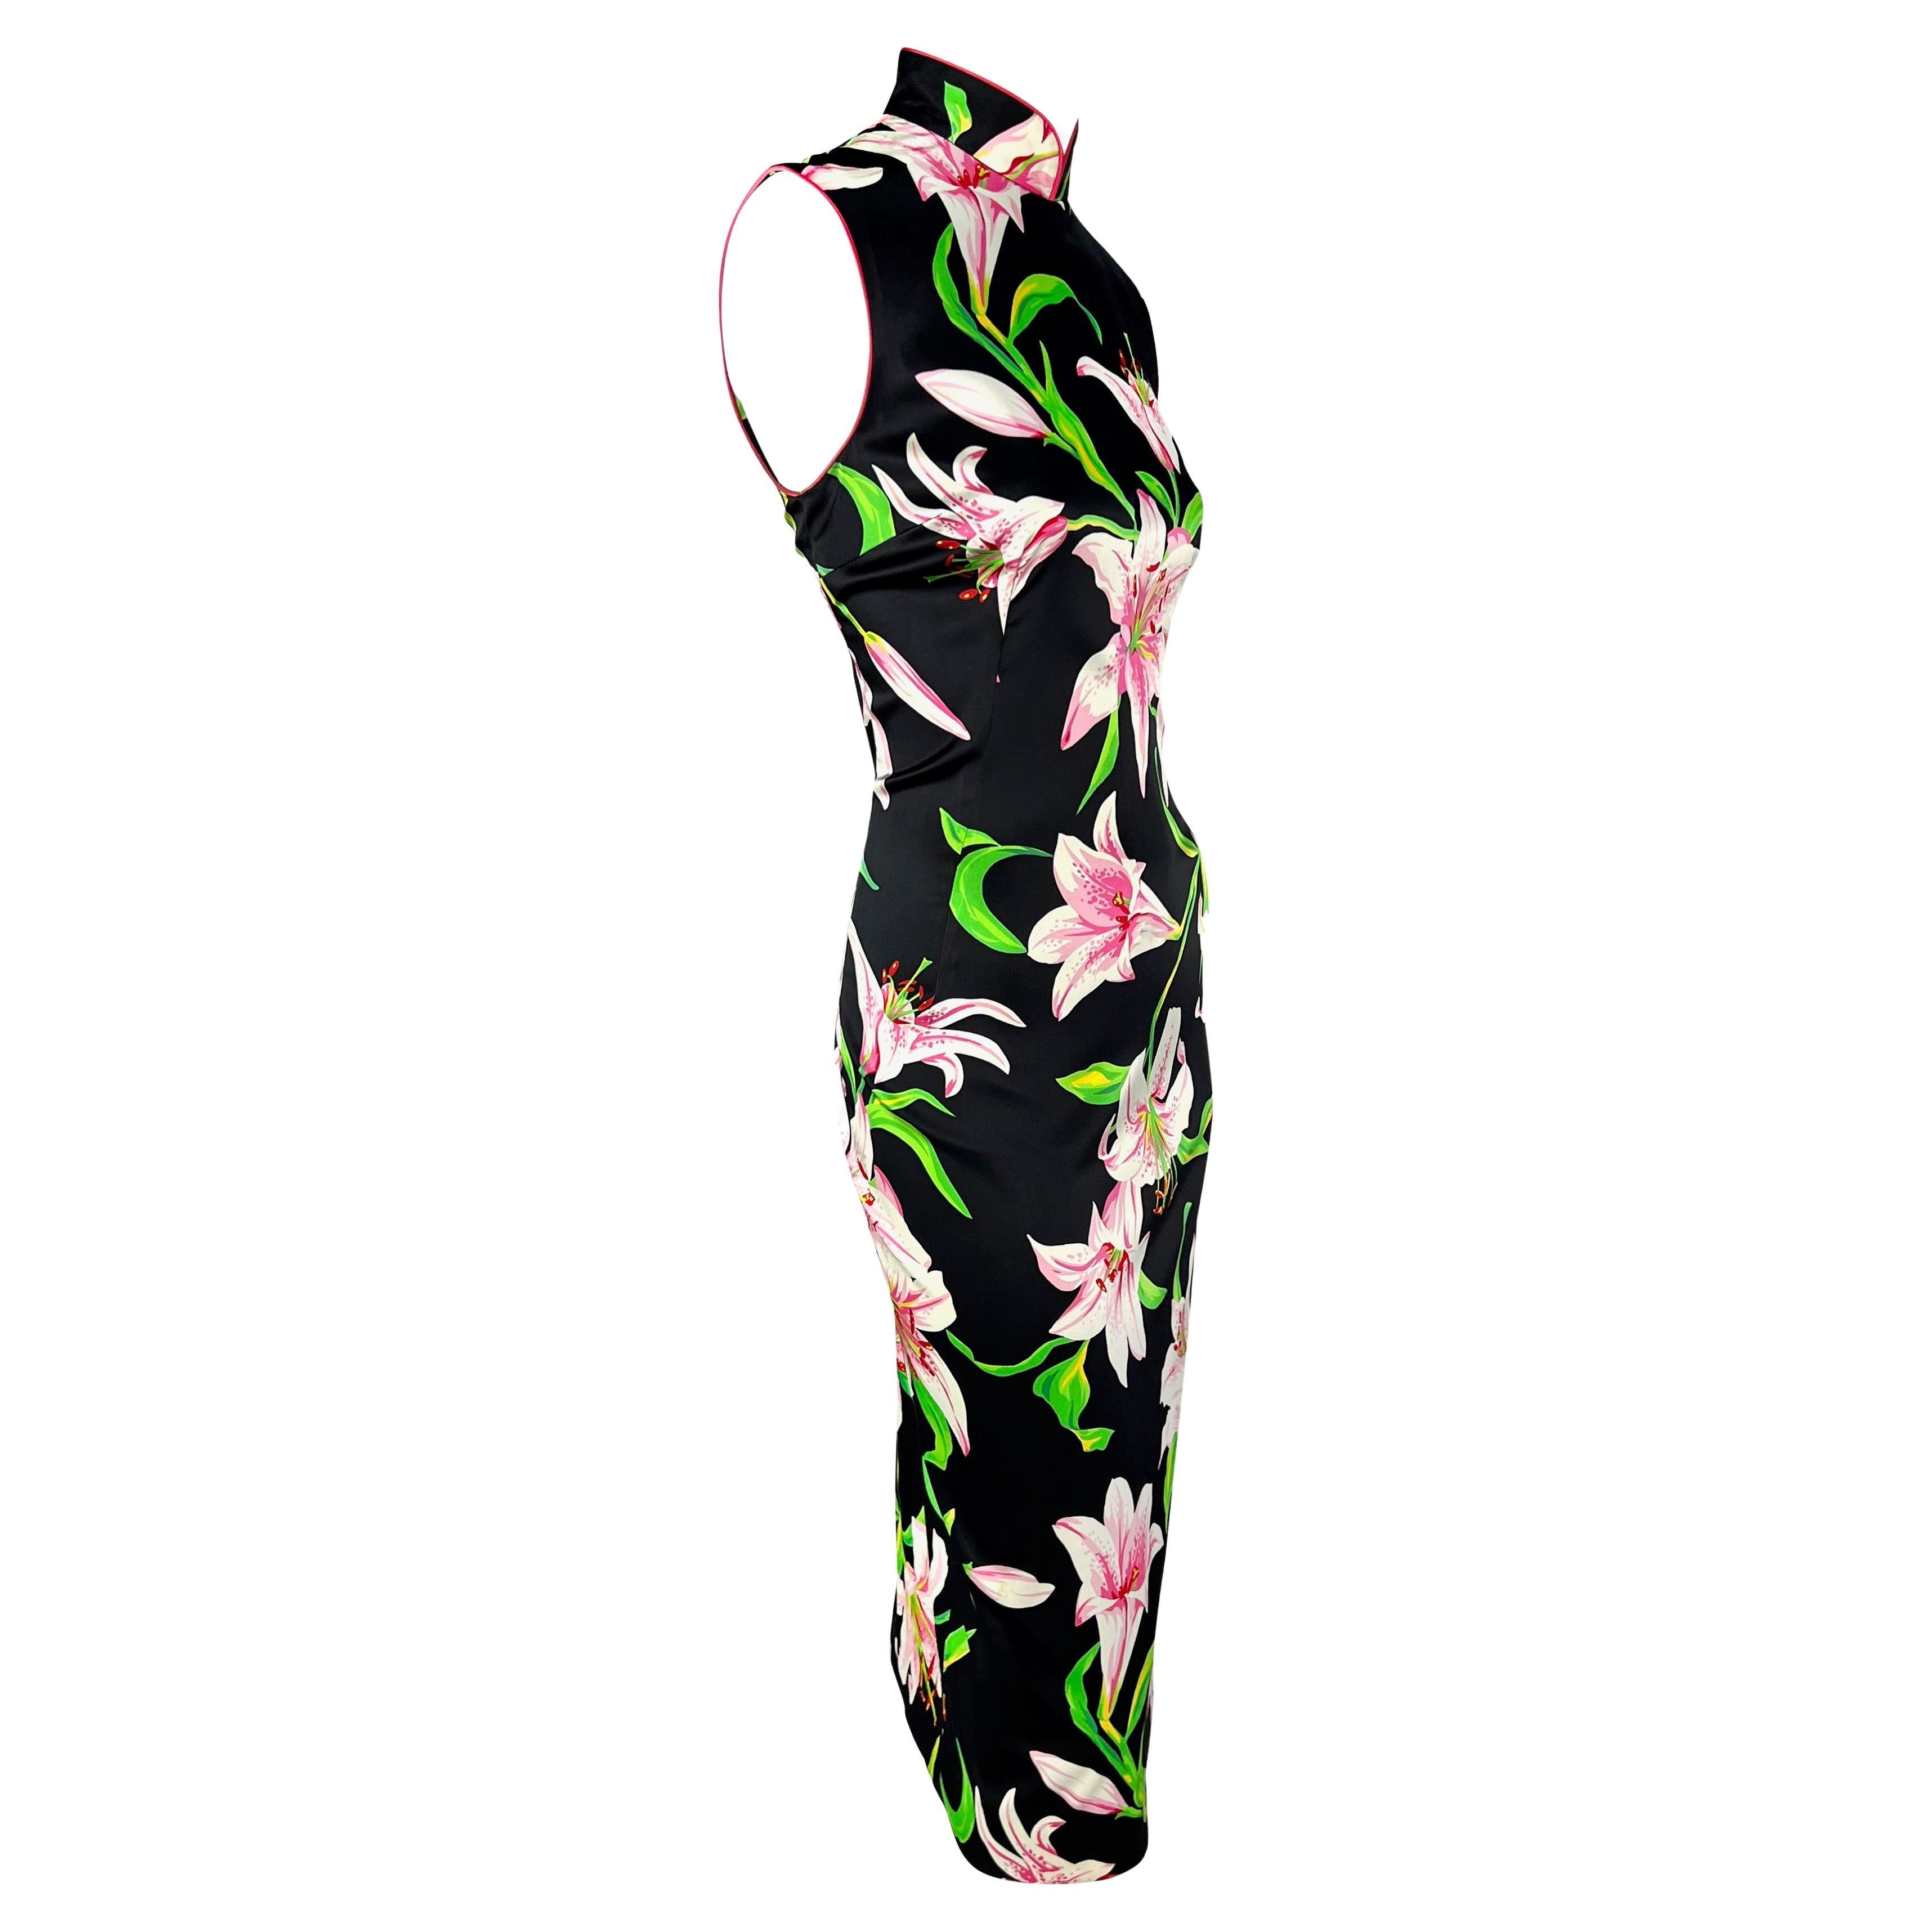 S/S 2001 Dolce & Gabbana Black Pink Lilly Print Bodycon Satin Sleeveless Dress For Sale 2